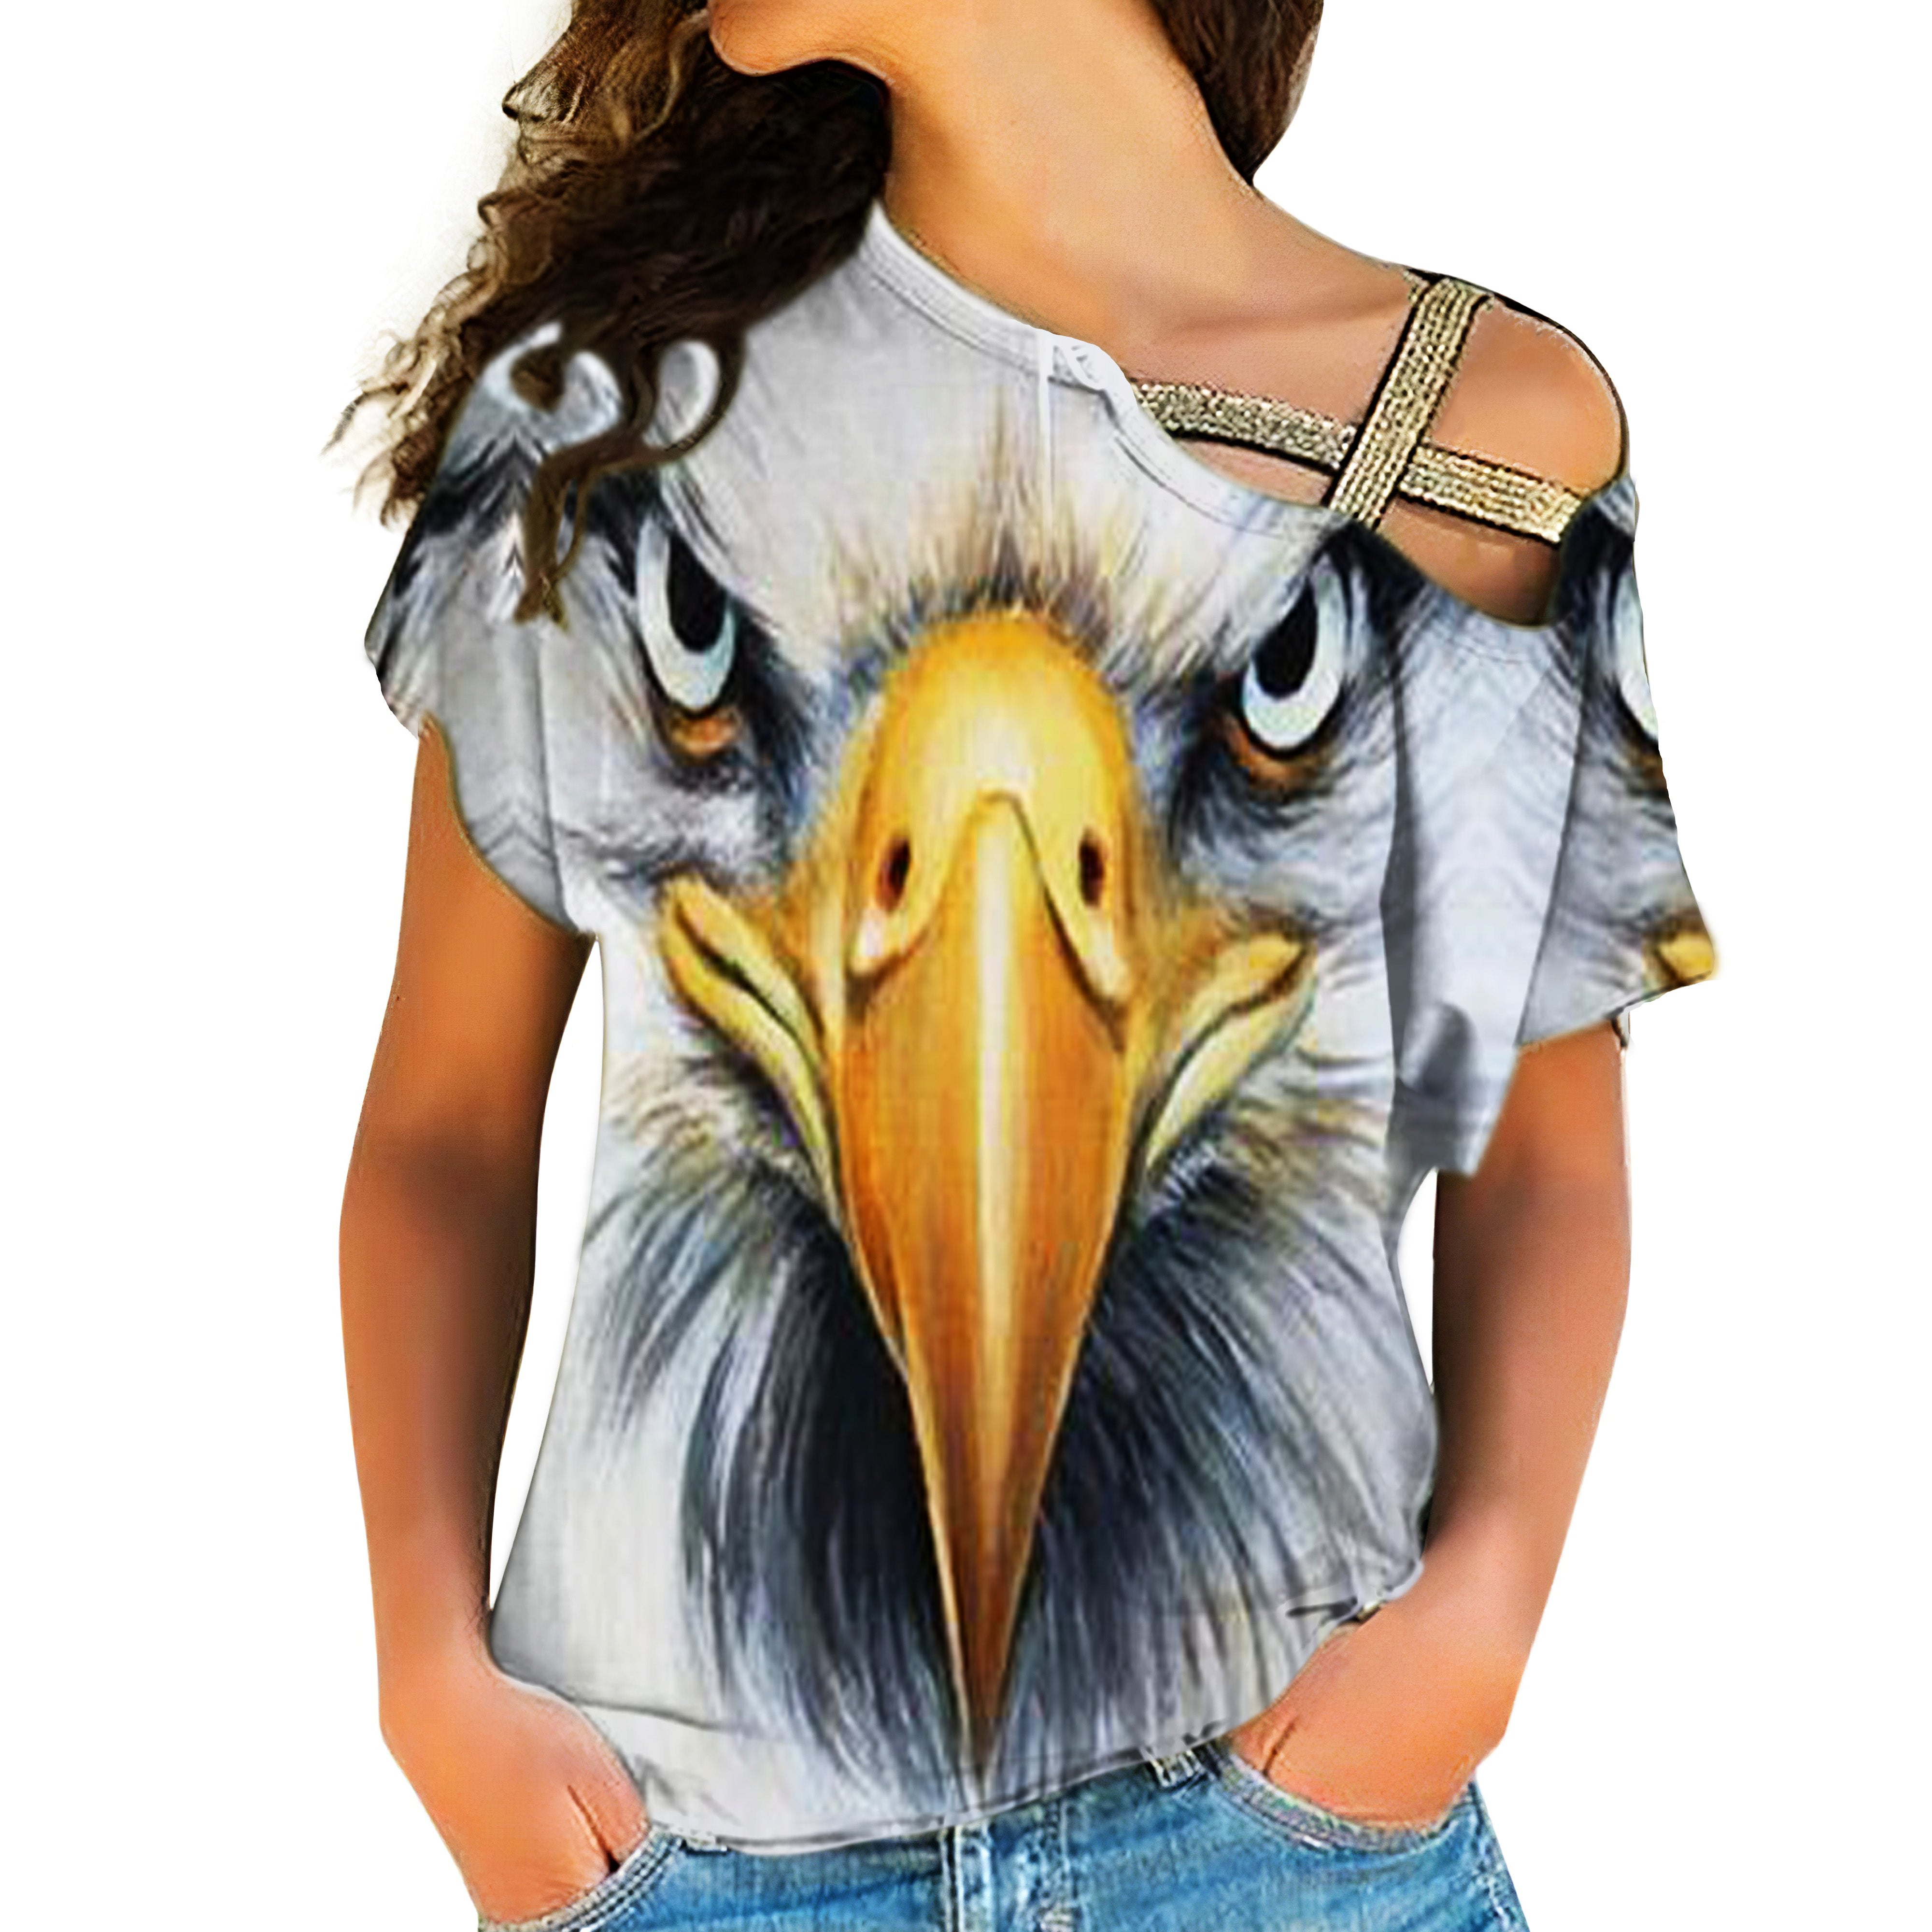 Powwow Store native american cross shoulder shirt 1140